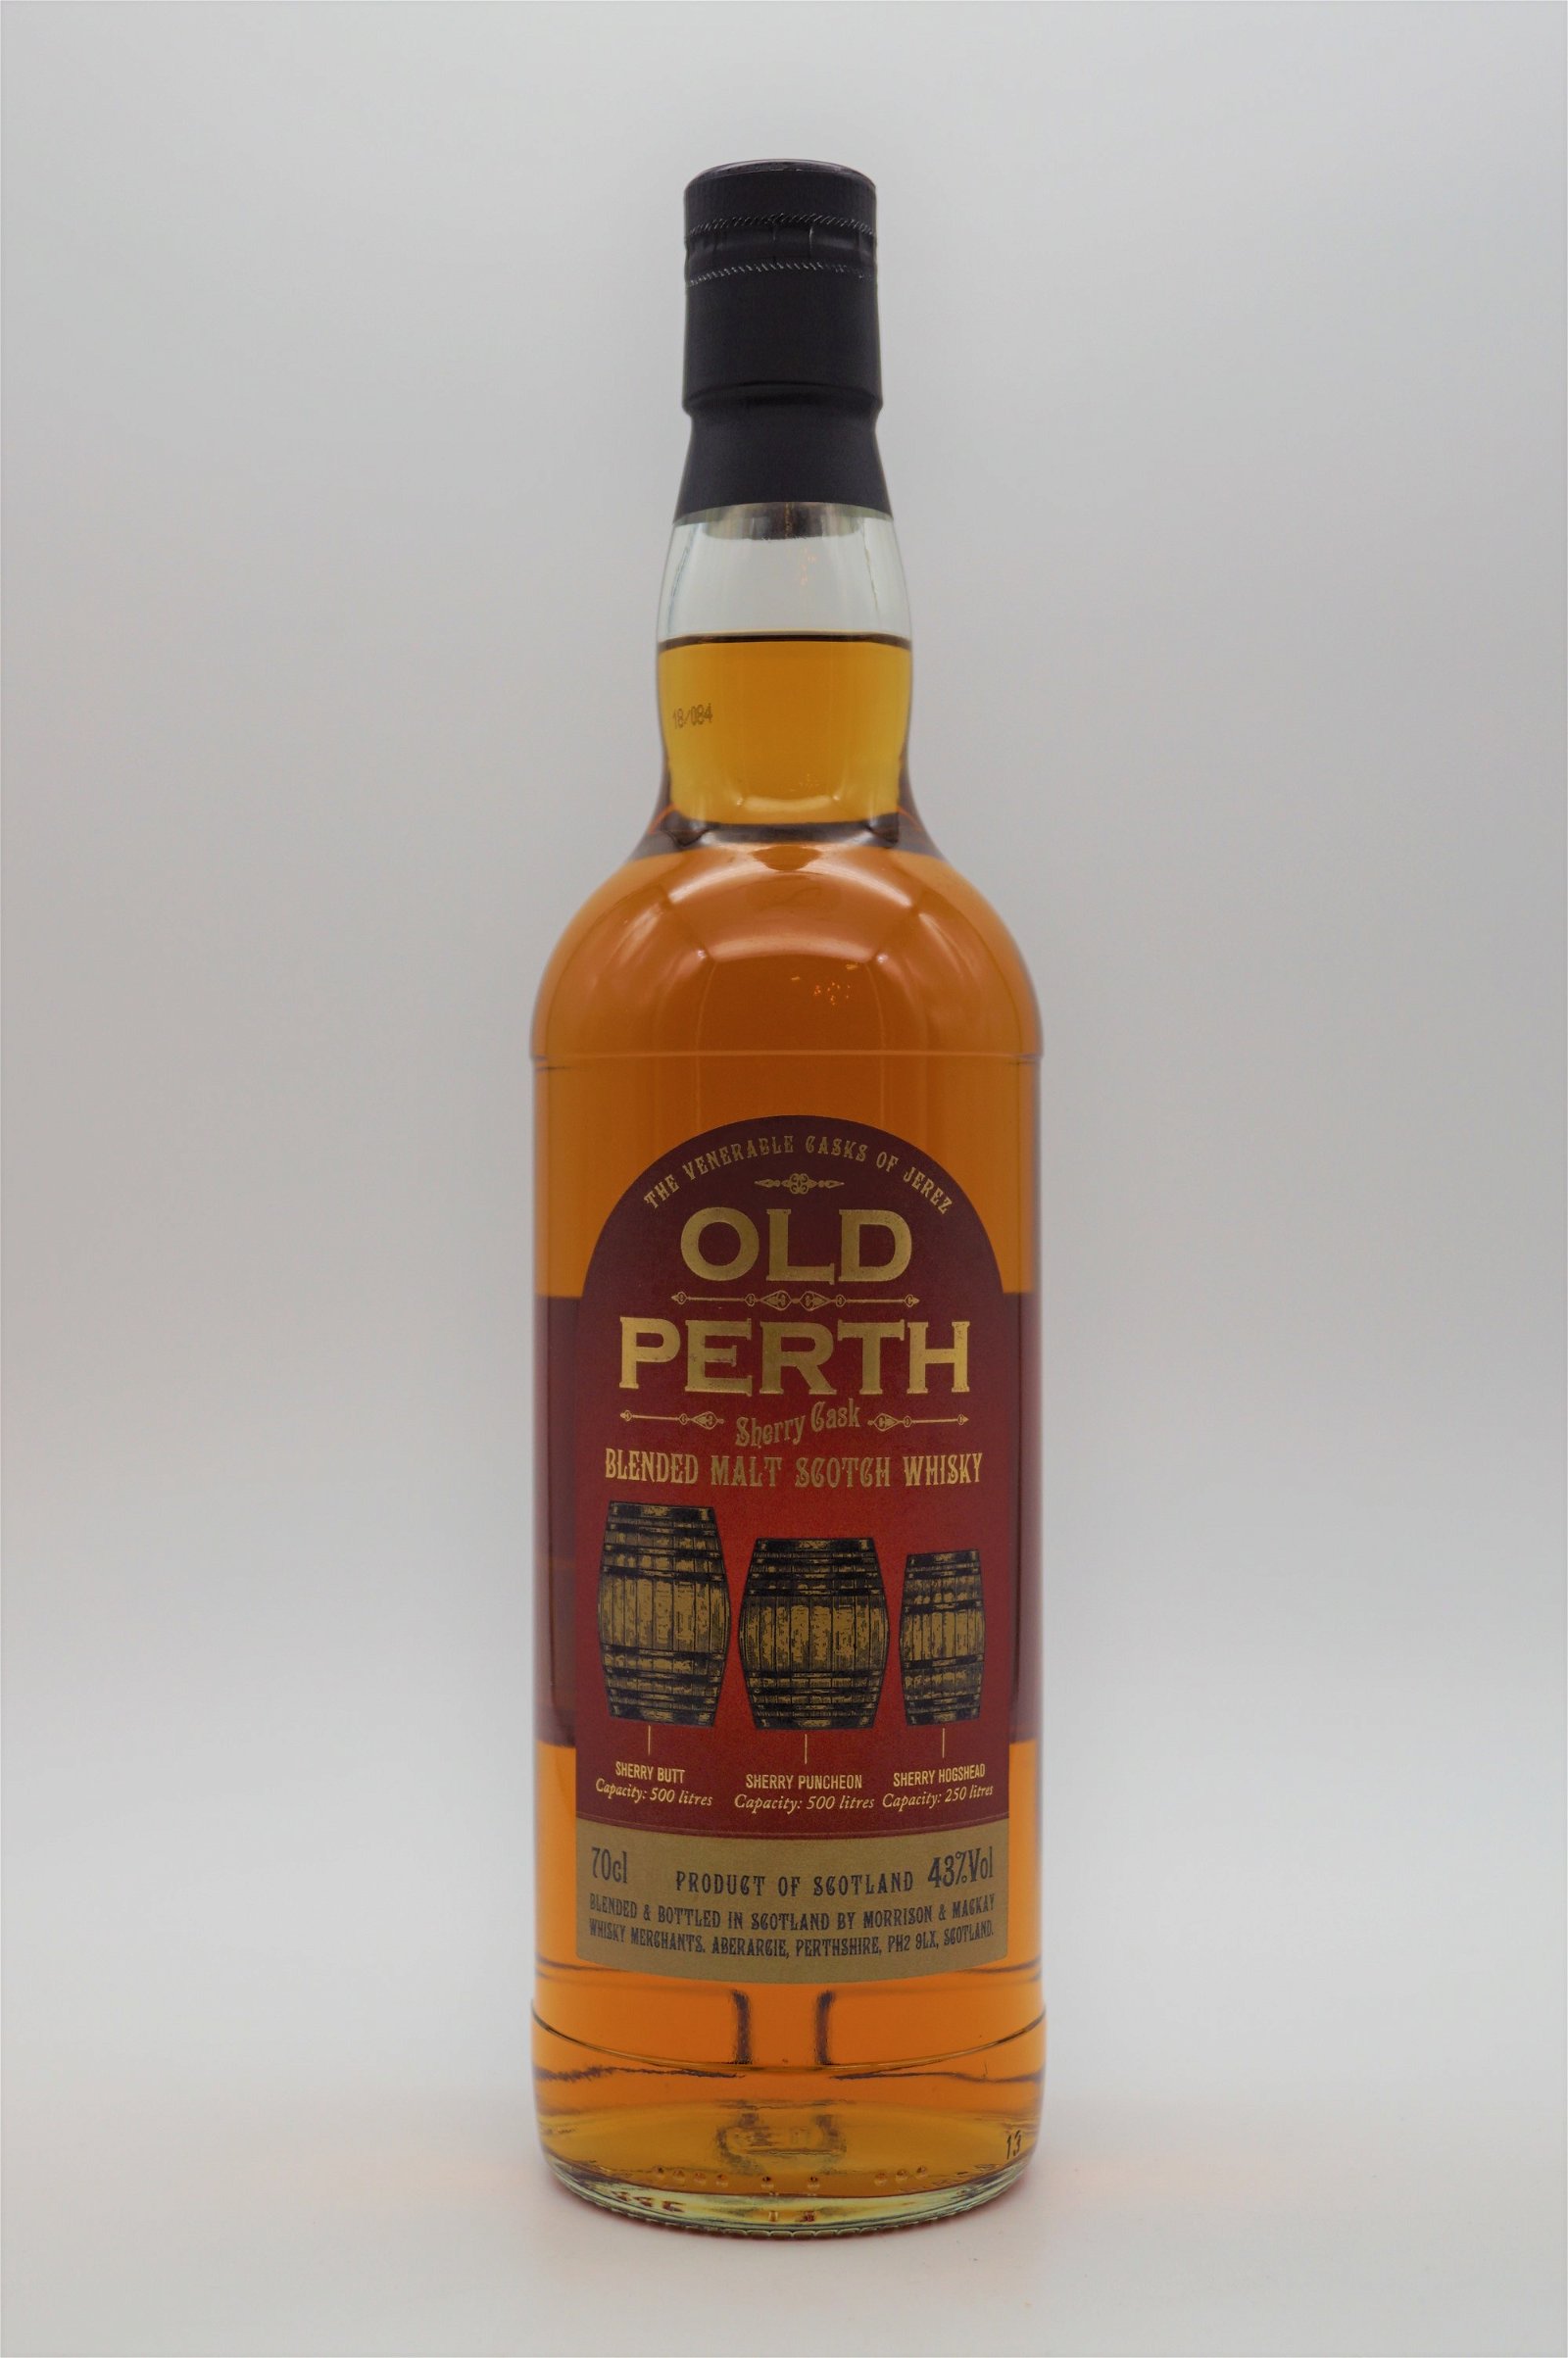 Old Perth Sherry Cask Blended Malt Scotch Whisky